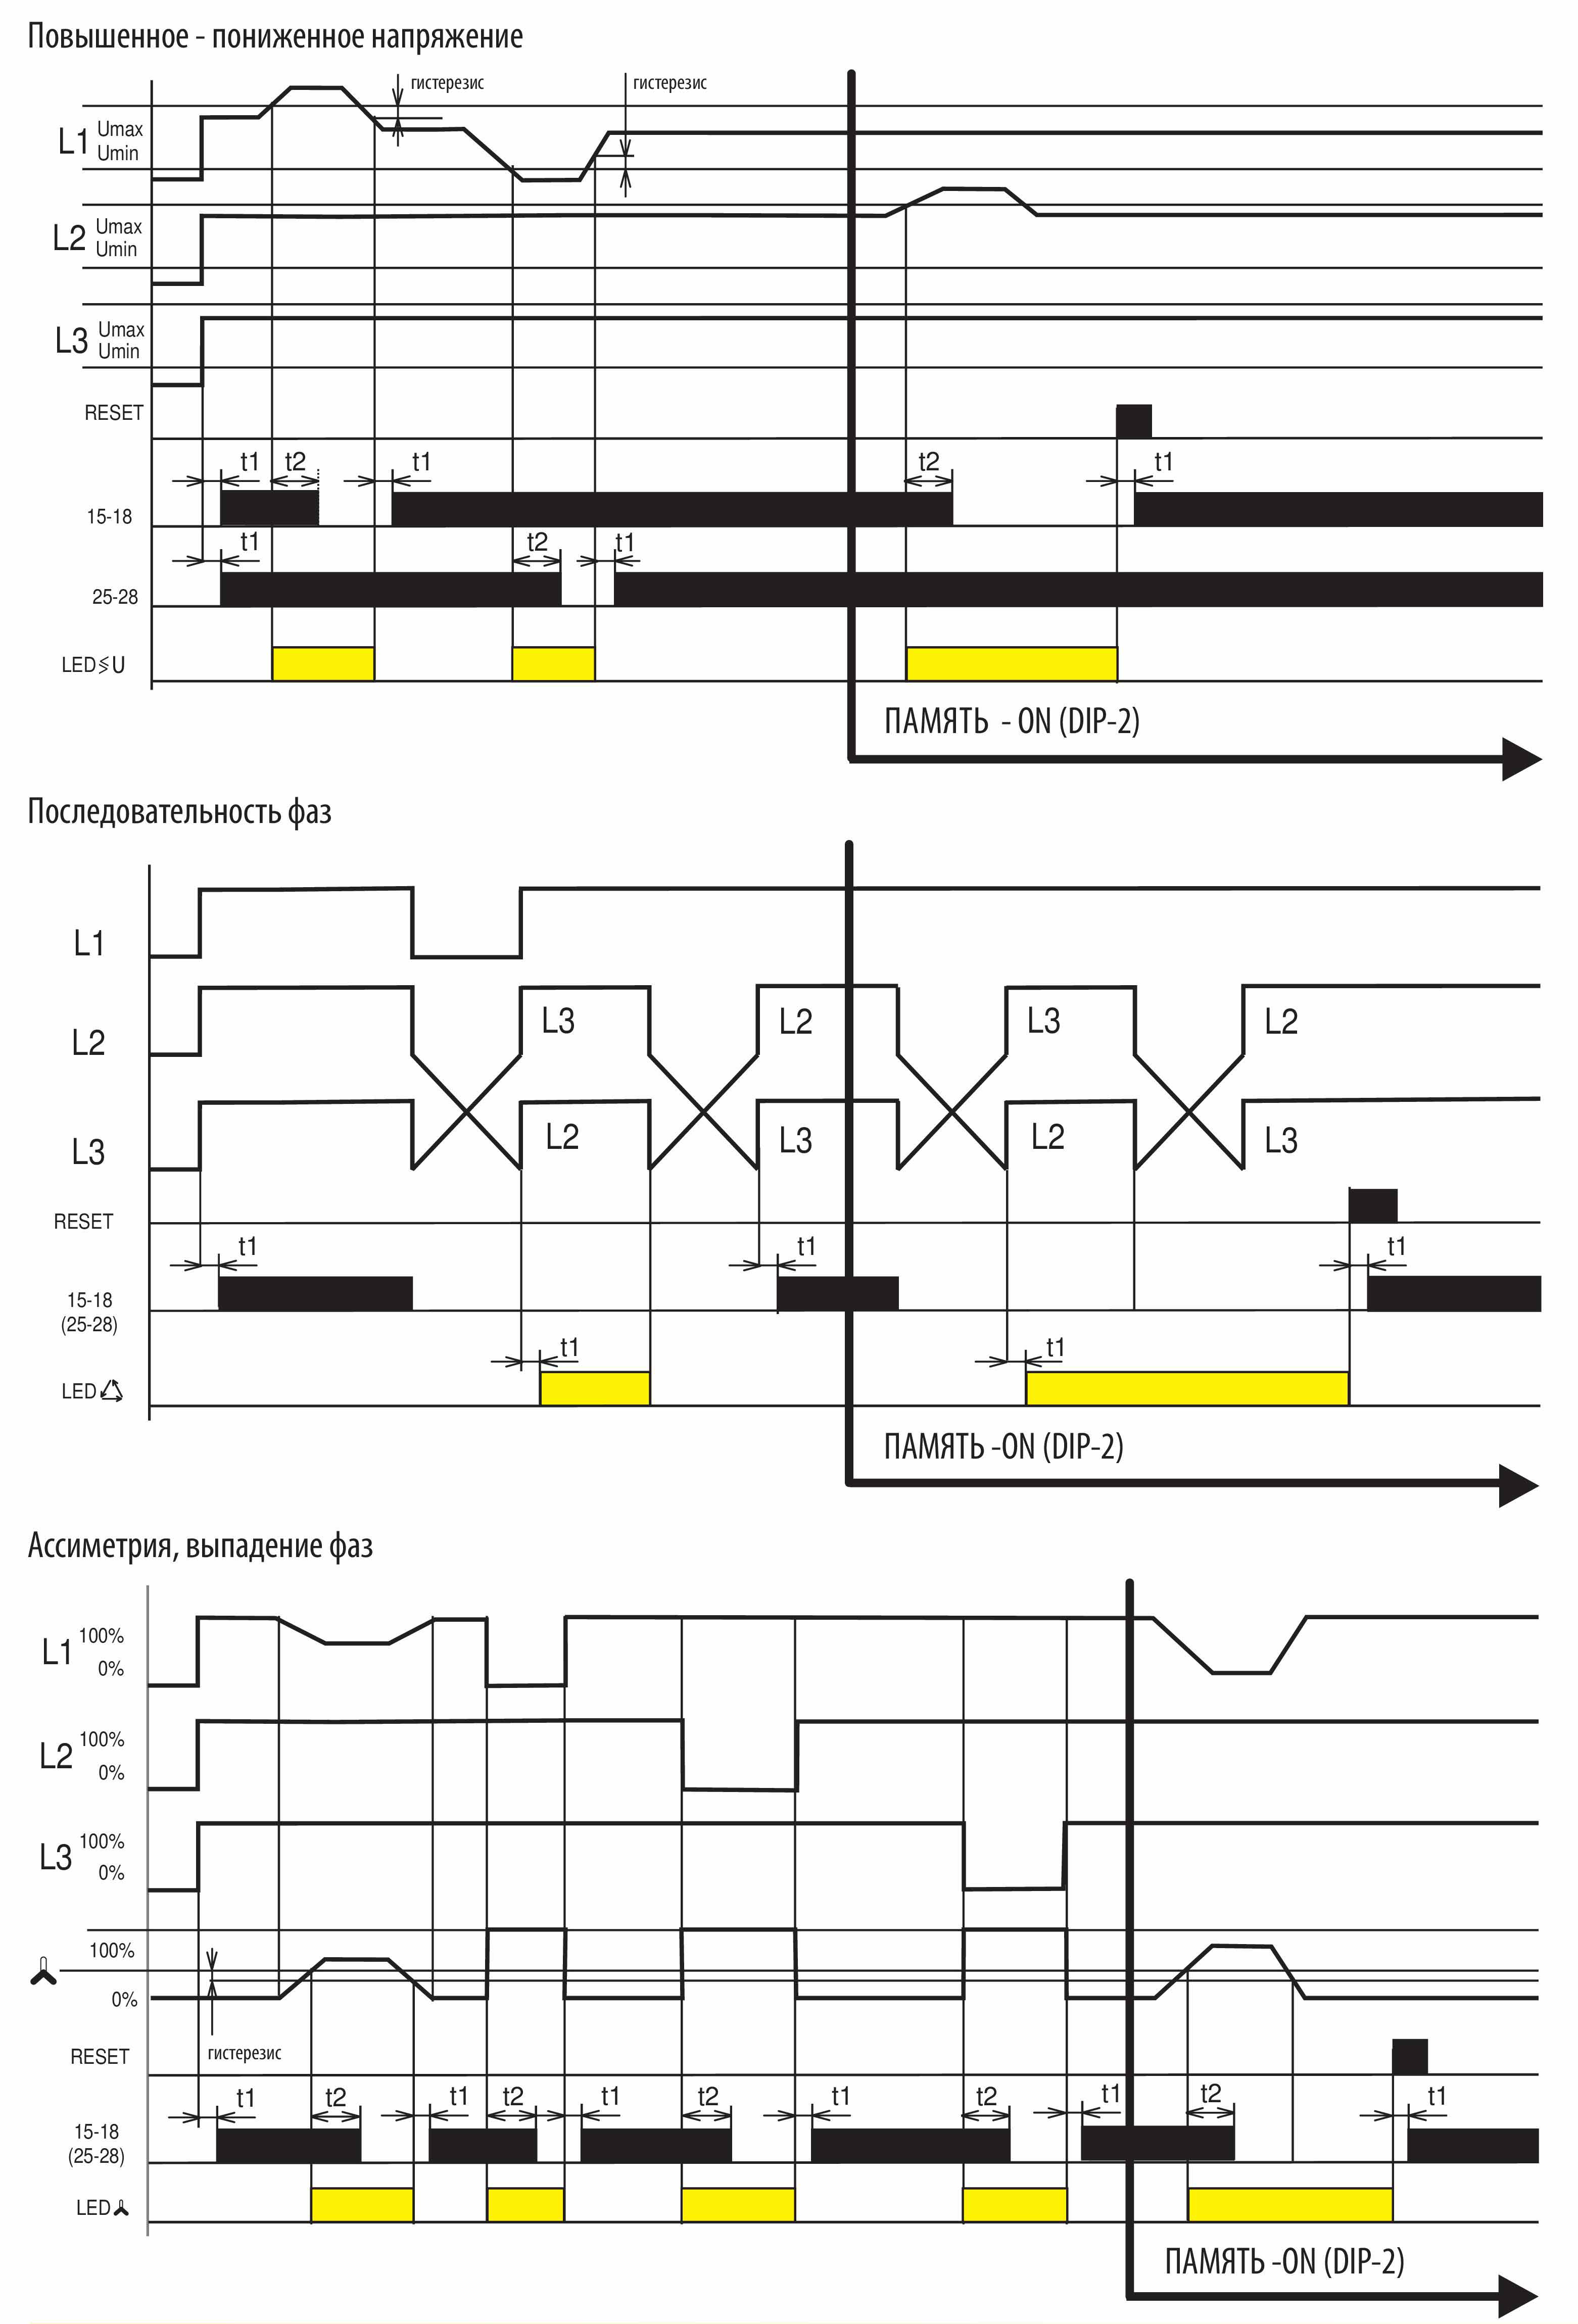 ЕЛ-23, ЕЛ-23Н - функциональная диаграмма